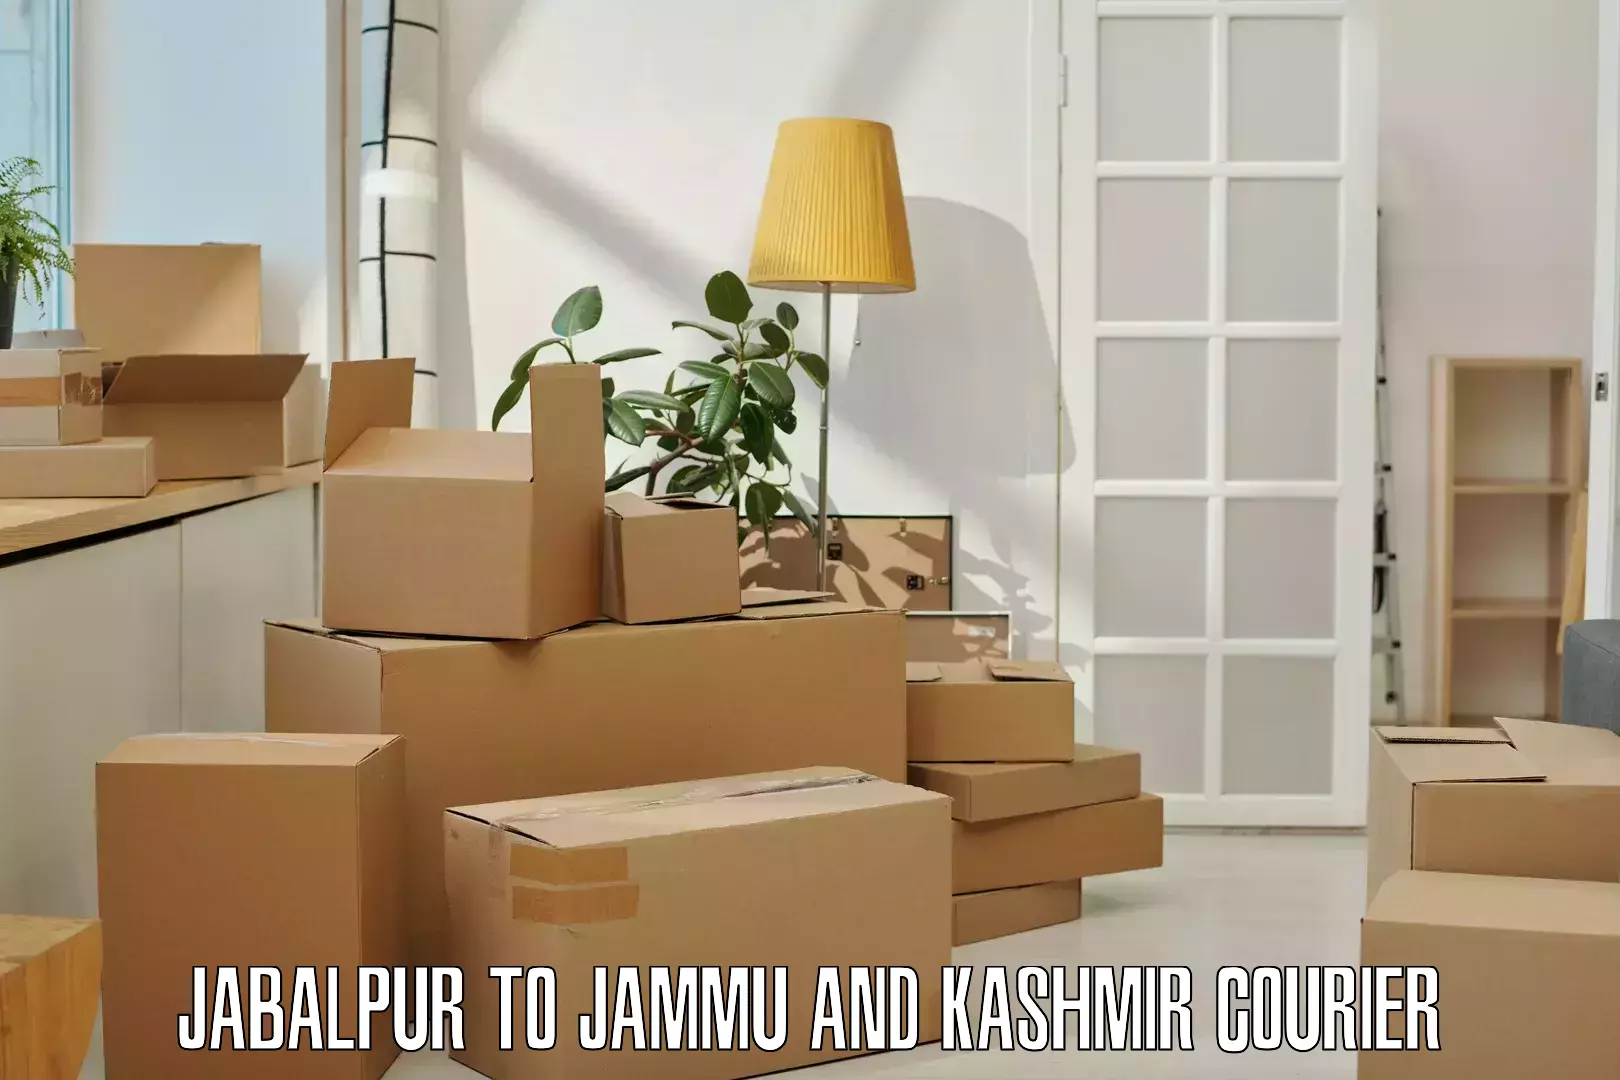 User-friendly courier app Jabalpur to Srinagar Kashmir